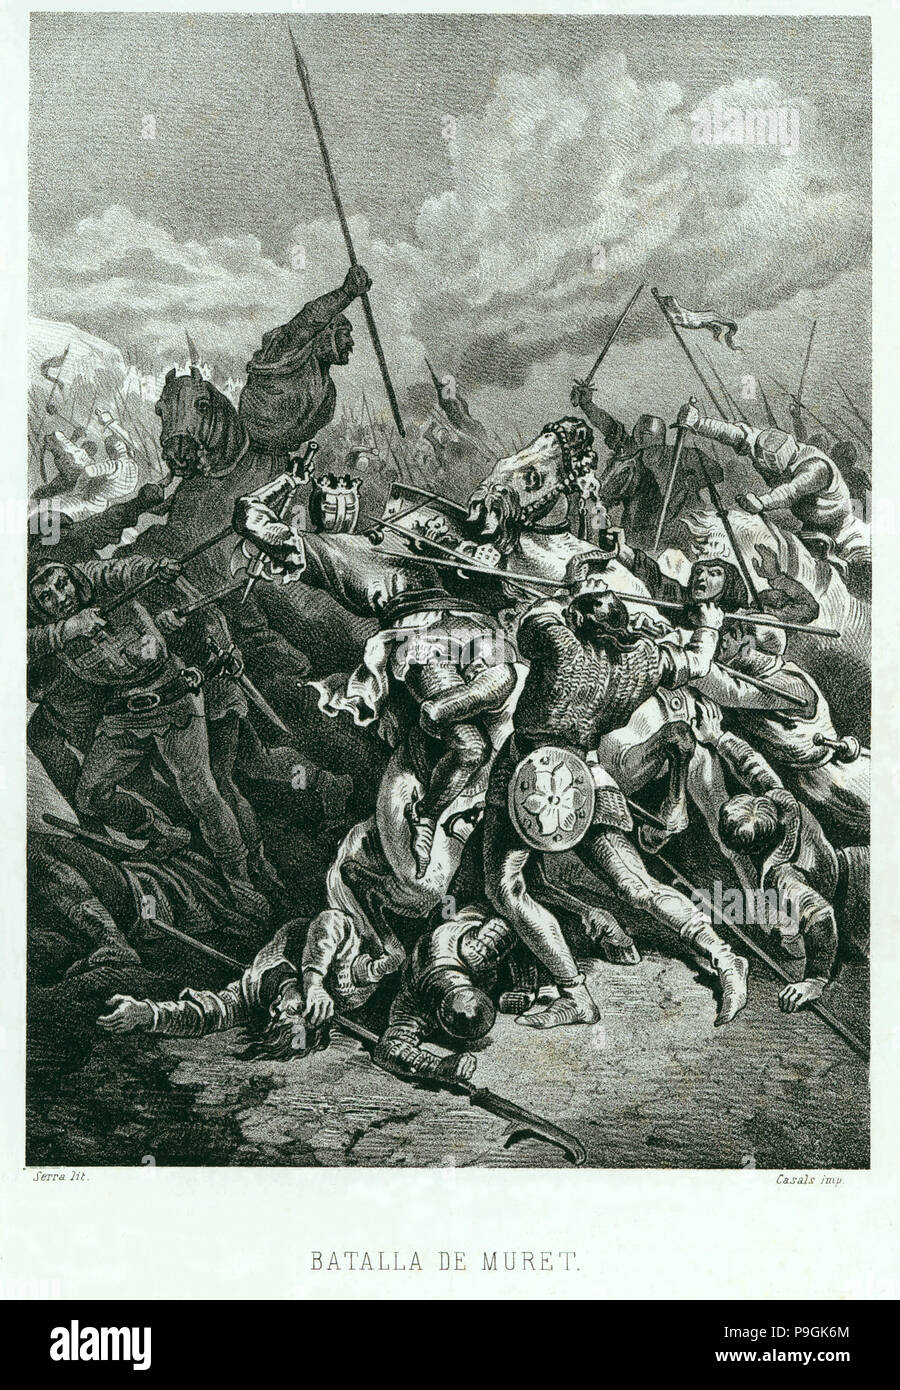 Battle of Muret, 1213, King D. Pedro II of Aragon died in battle, engraving. Stock Photo